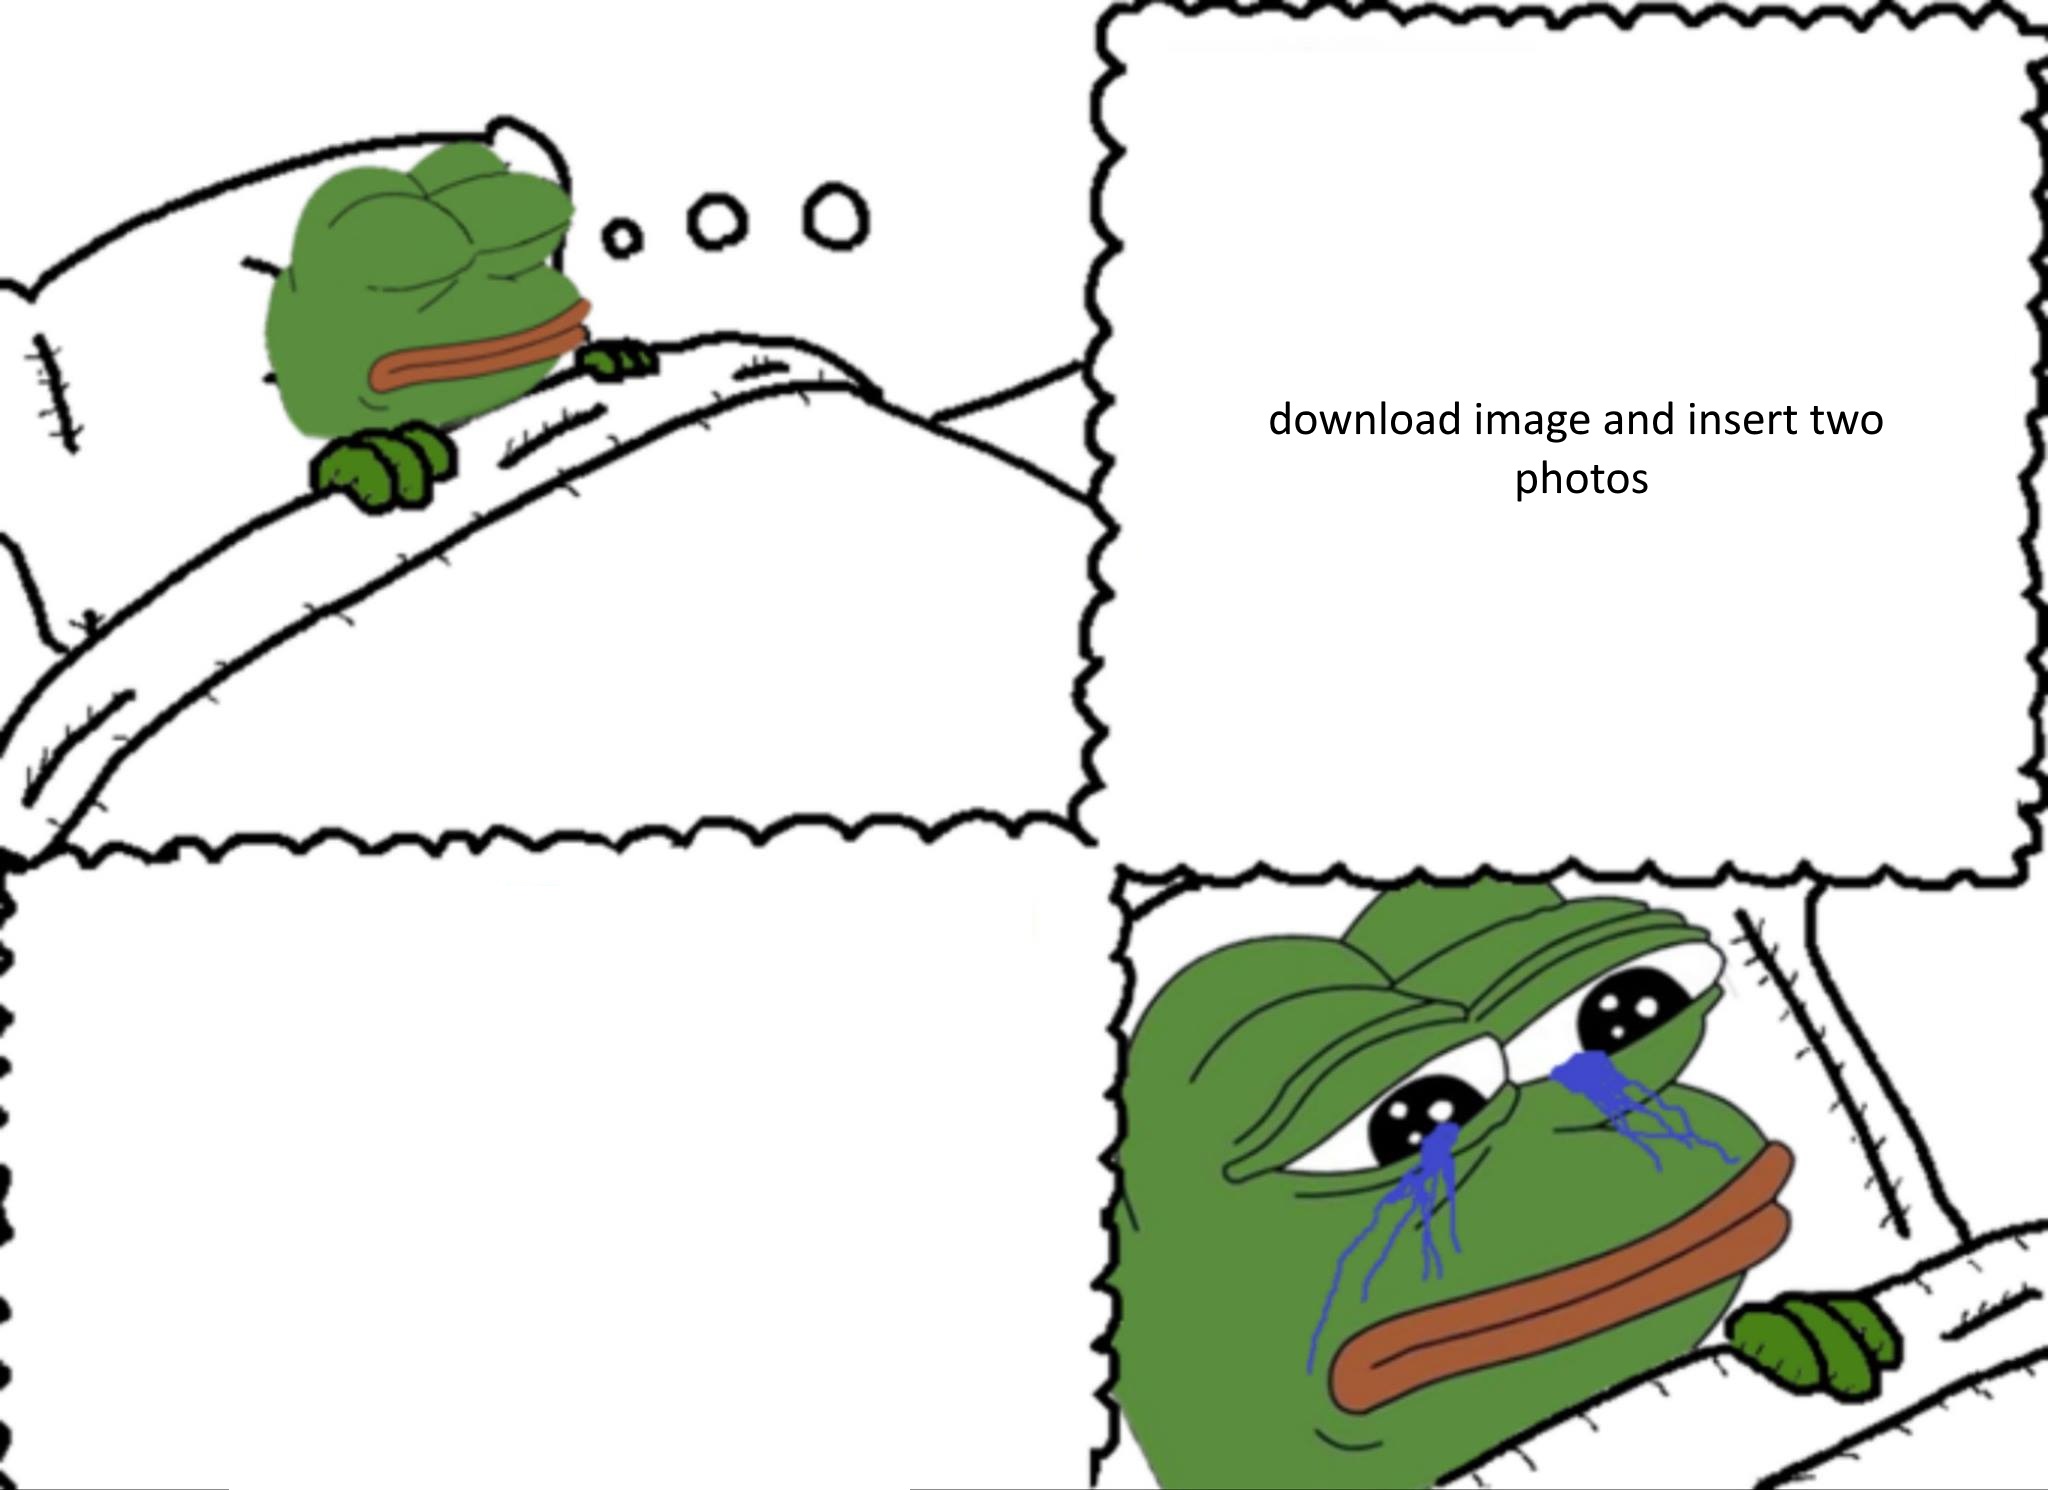 All Memes. feels bad man frog crushed dreams. 